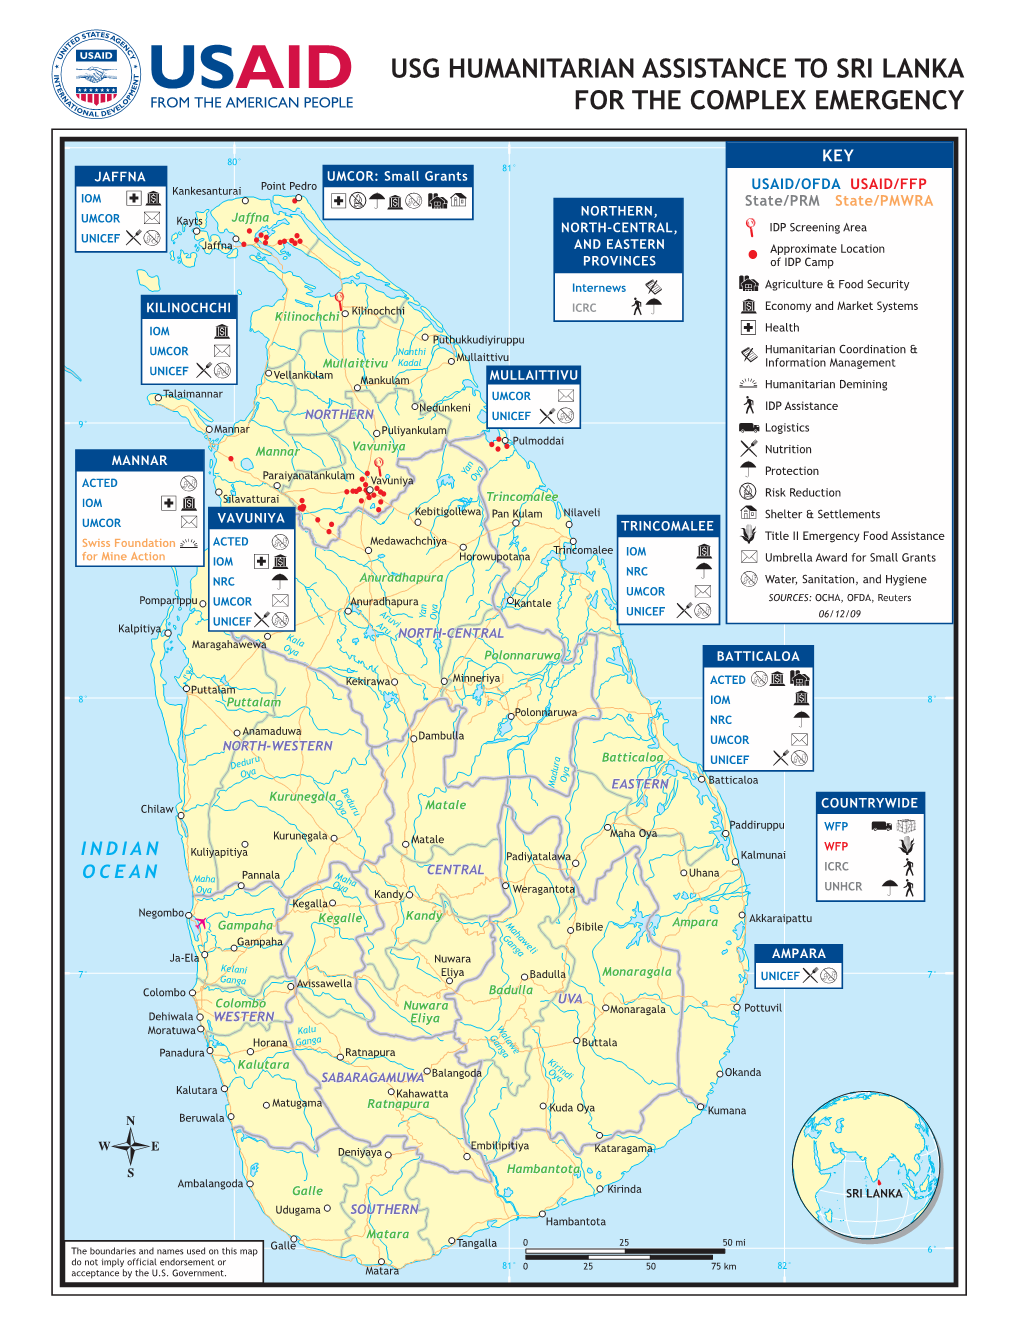 USAID/OFDA Sri Lanka Program Map 6/12/2009